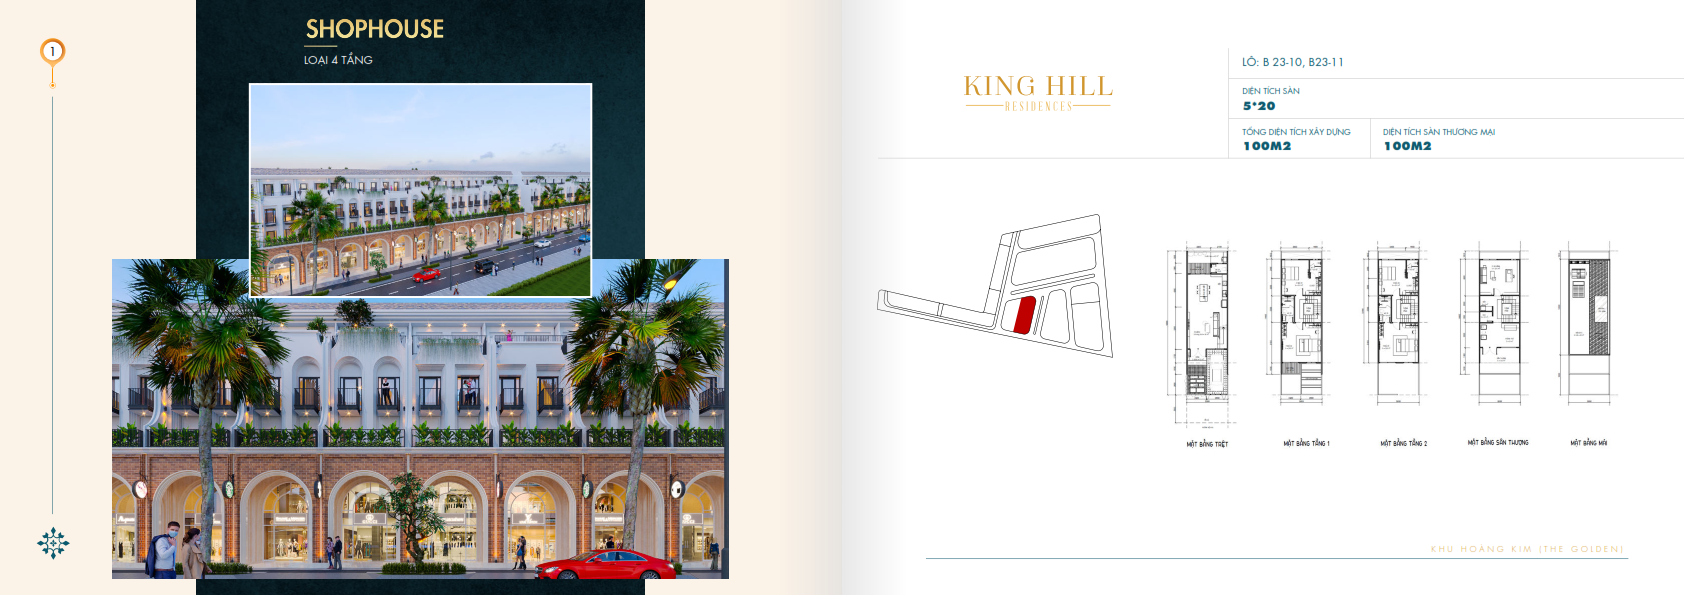 Shophouse Du an King Hill Residences - King Hill Residences